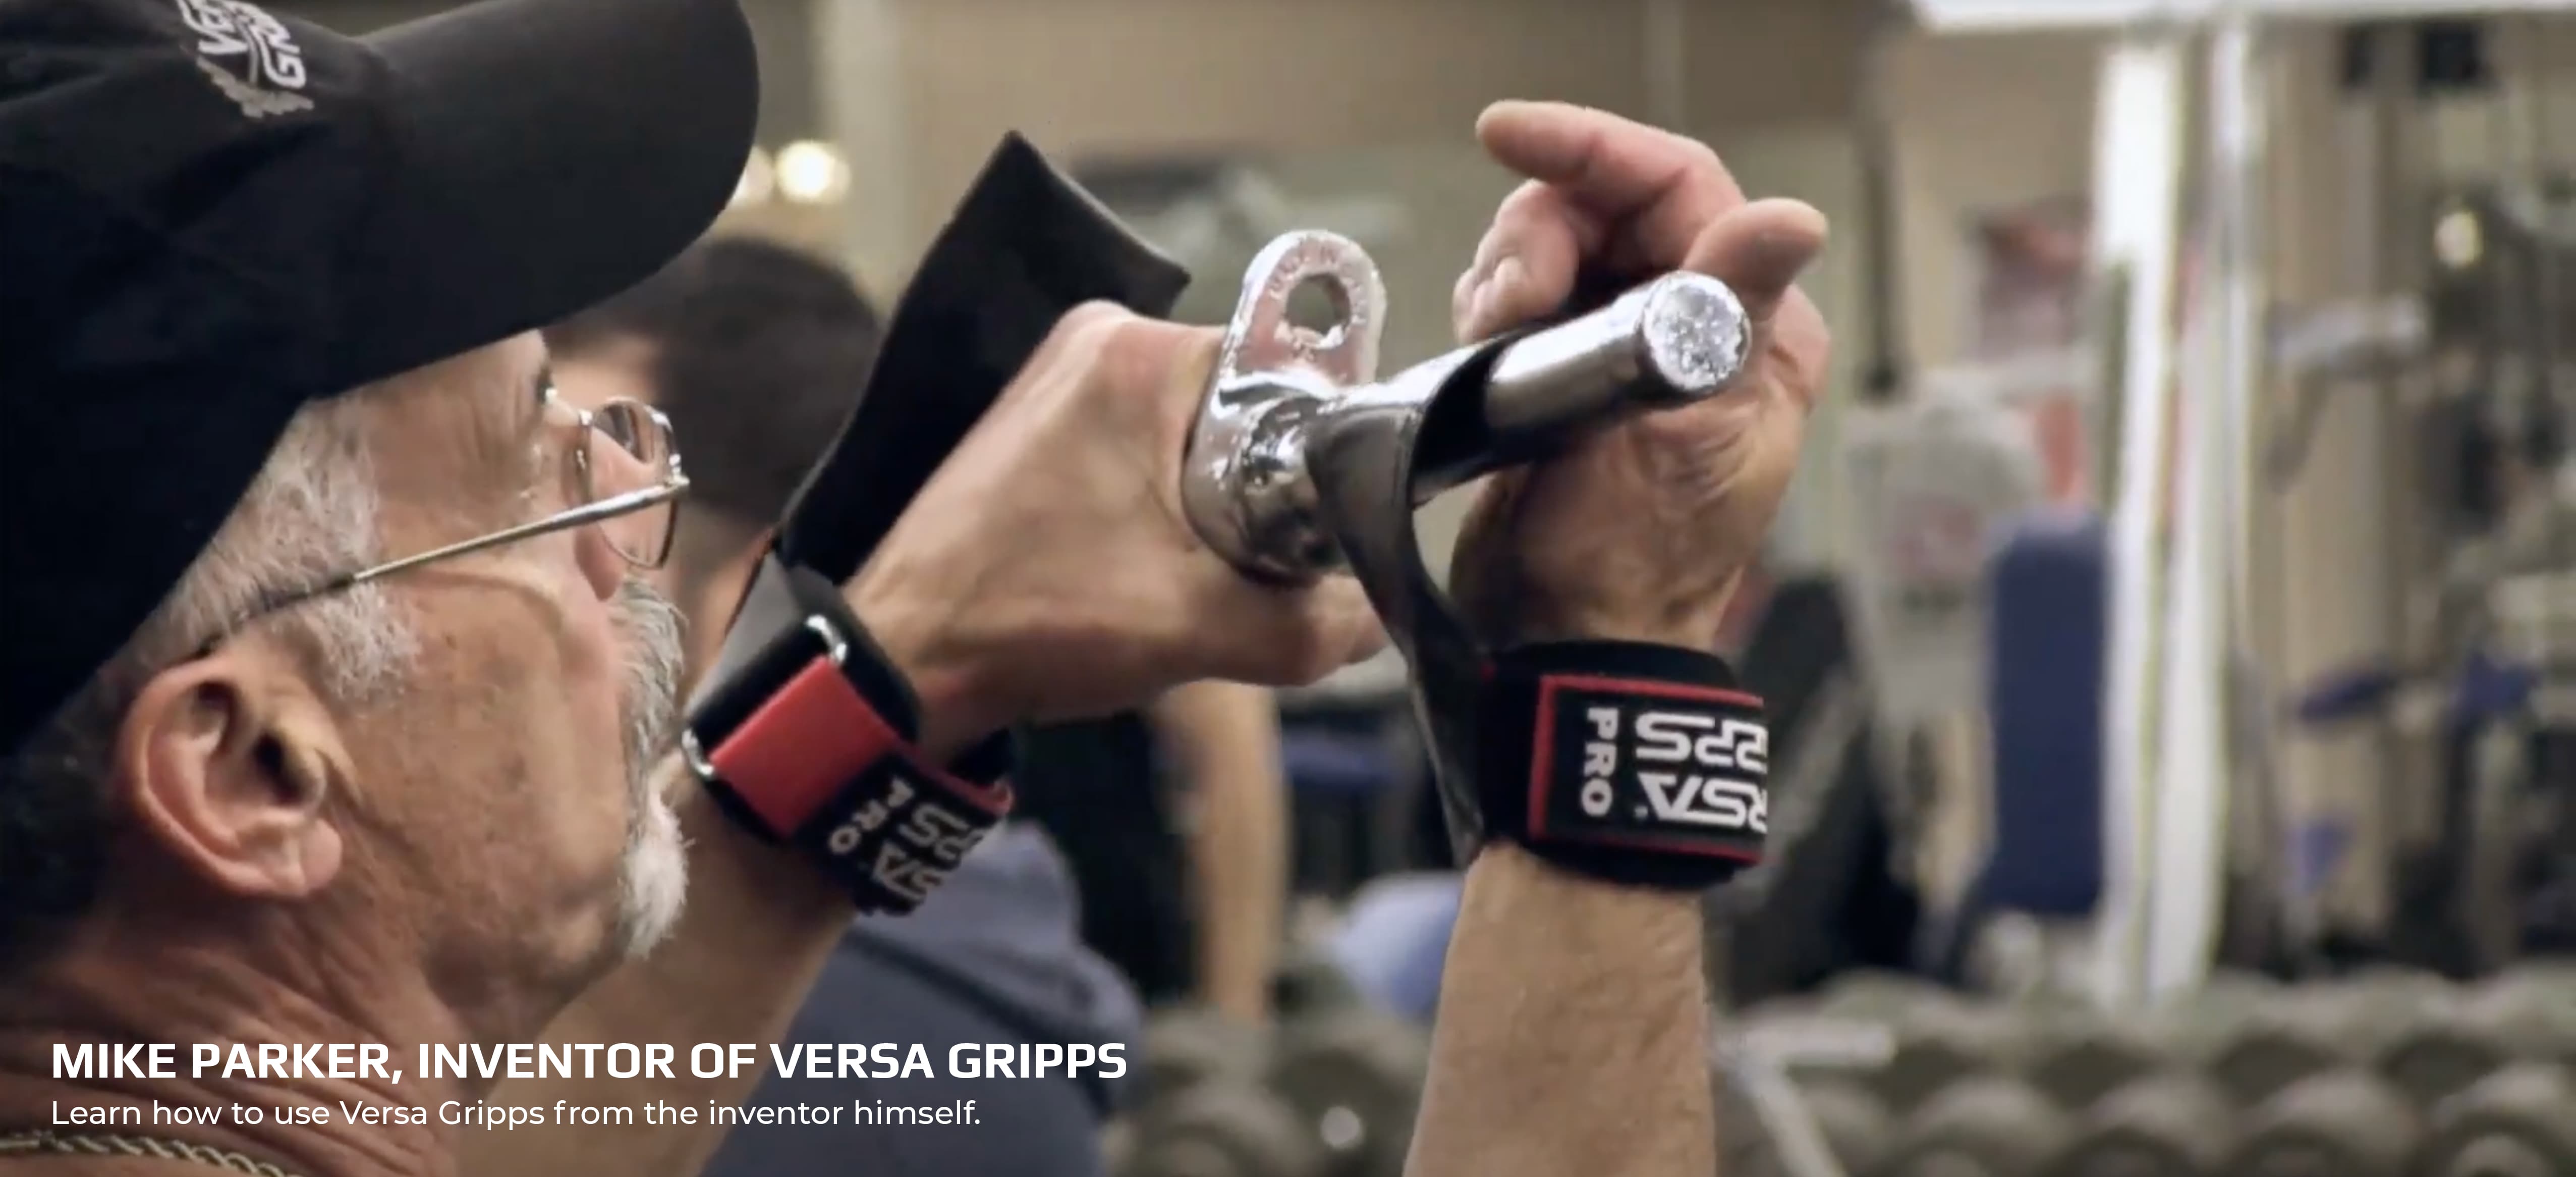 Versa Grippsスポーツ/アウトドア